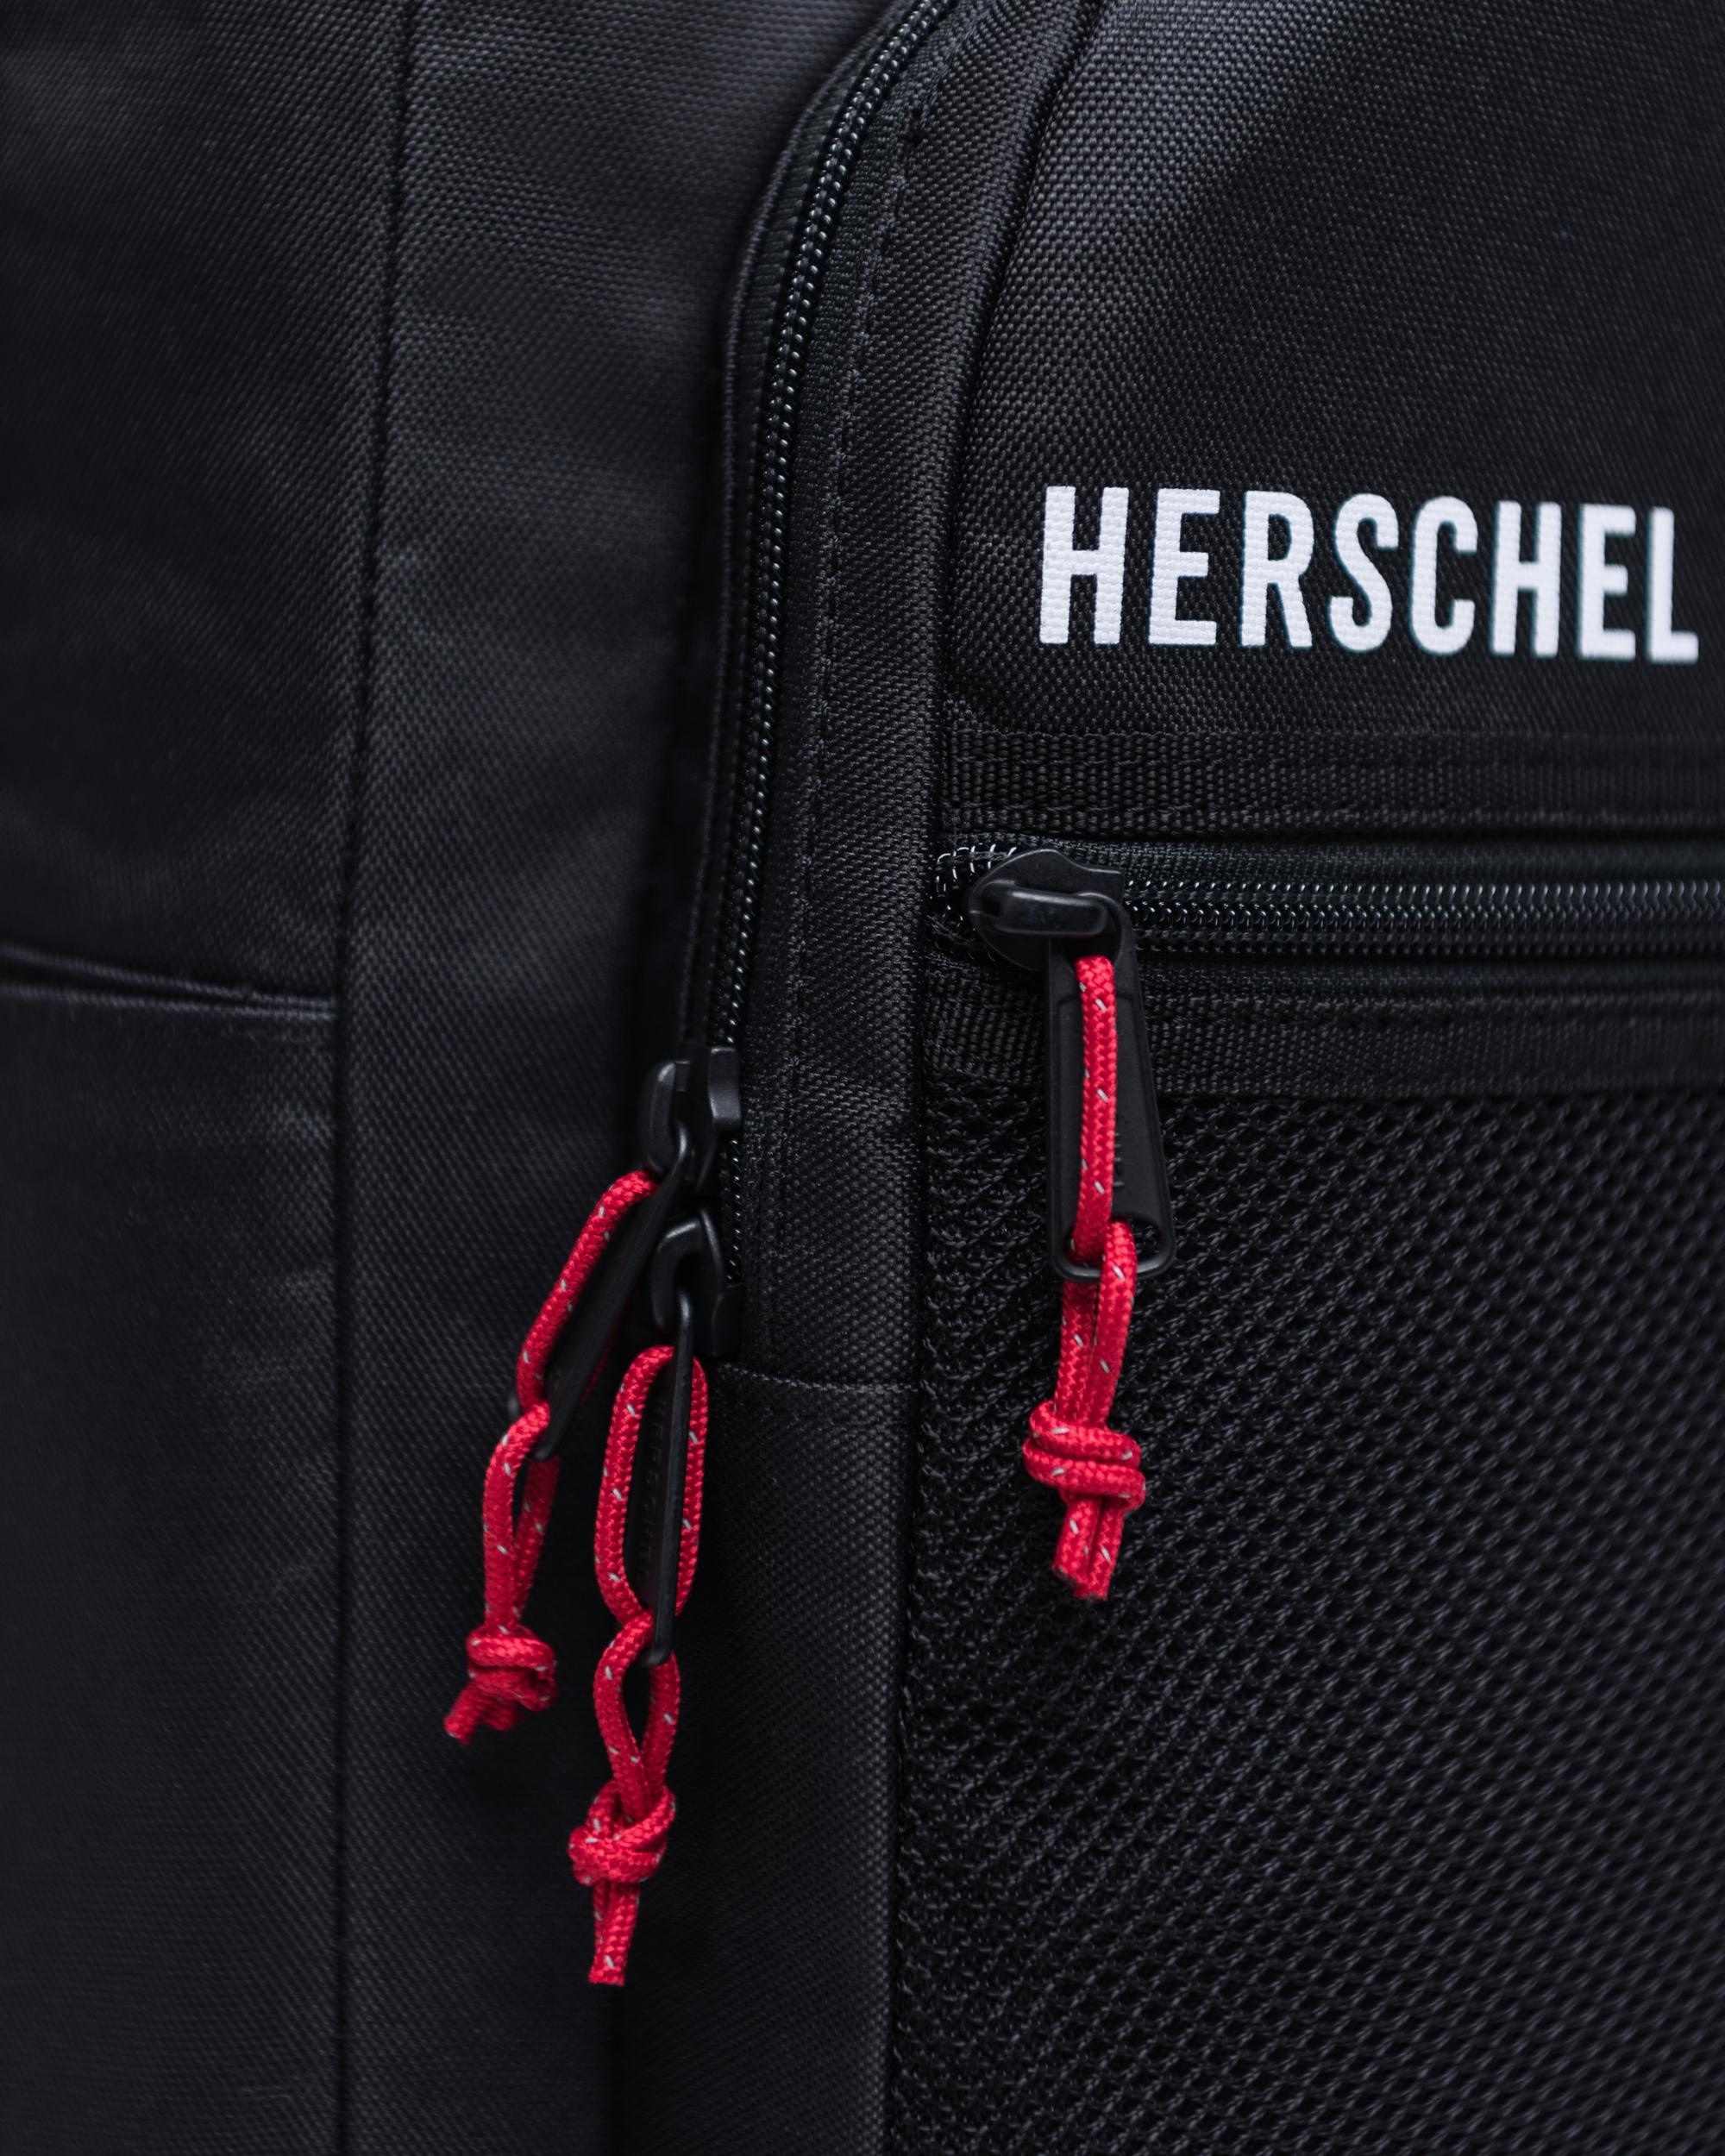 Herschel Dallas Mavericks Hardwood Classics Kaine Backpack